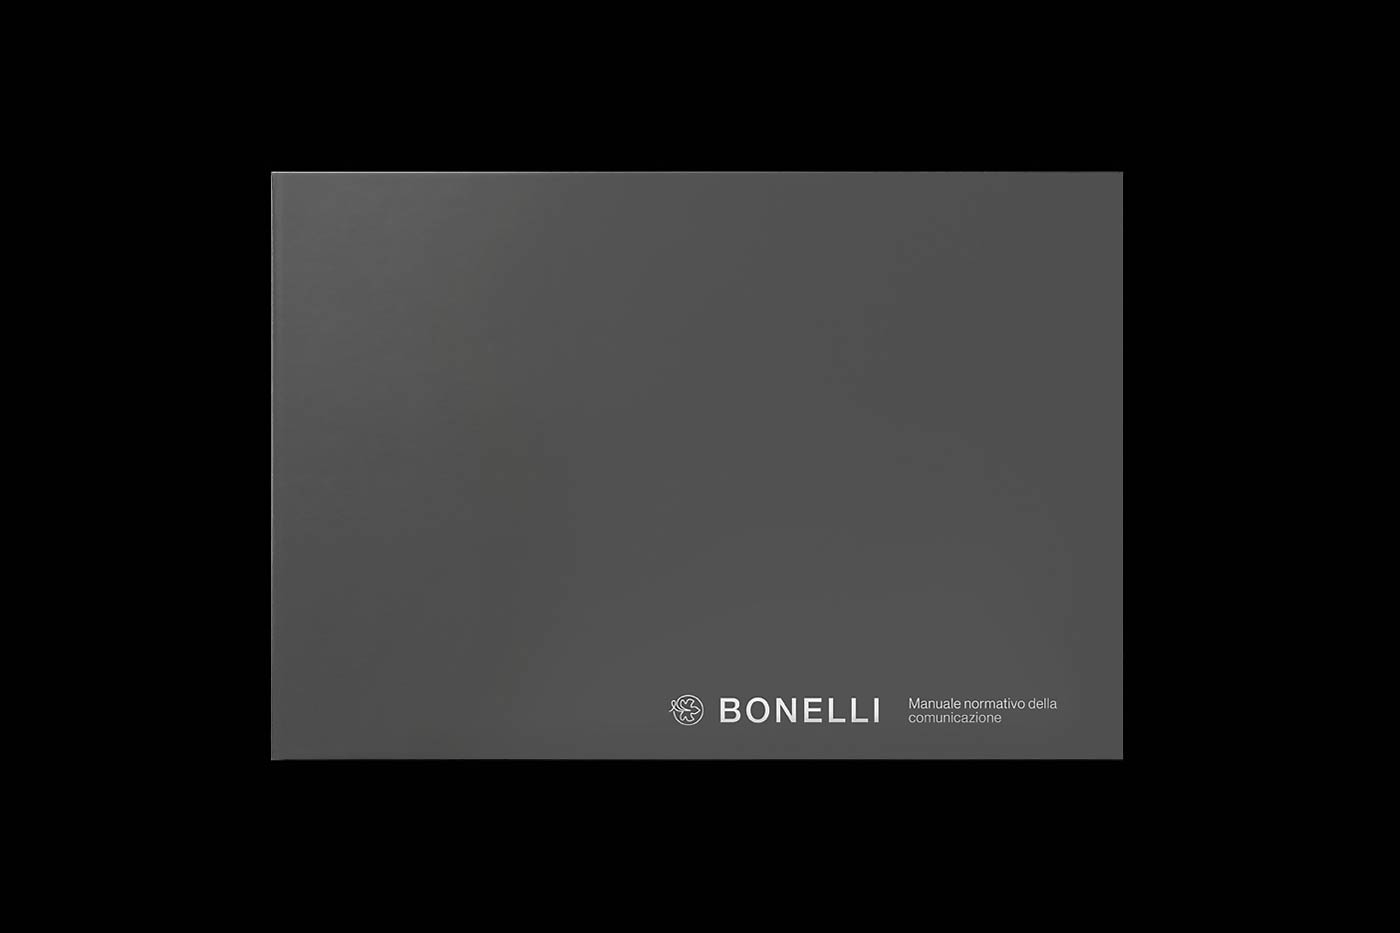 bonelli corporate identity standards manual